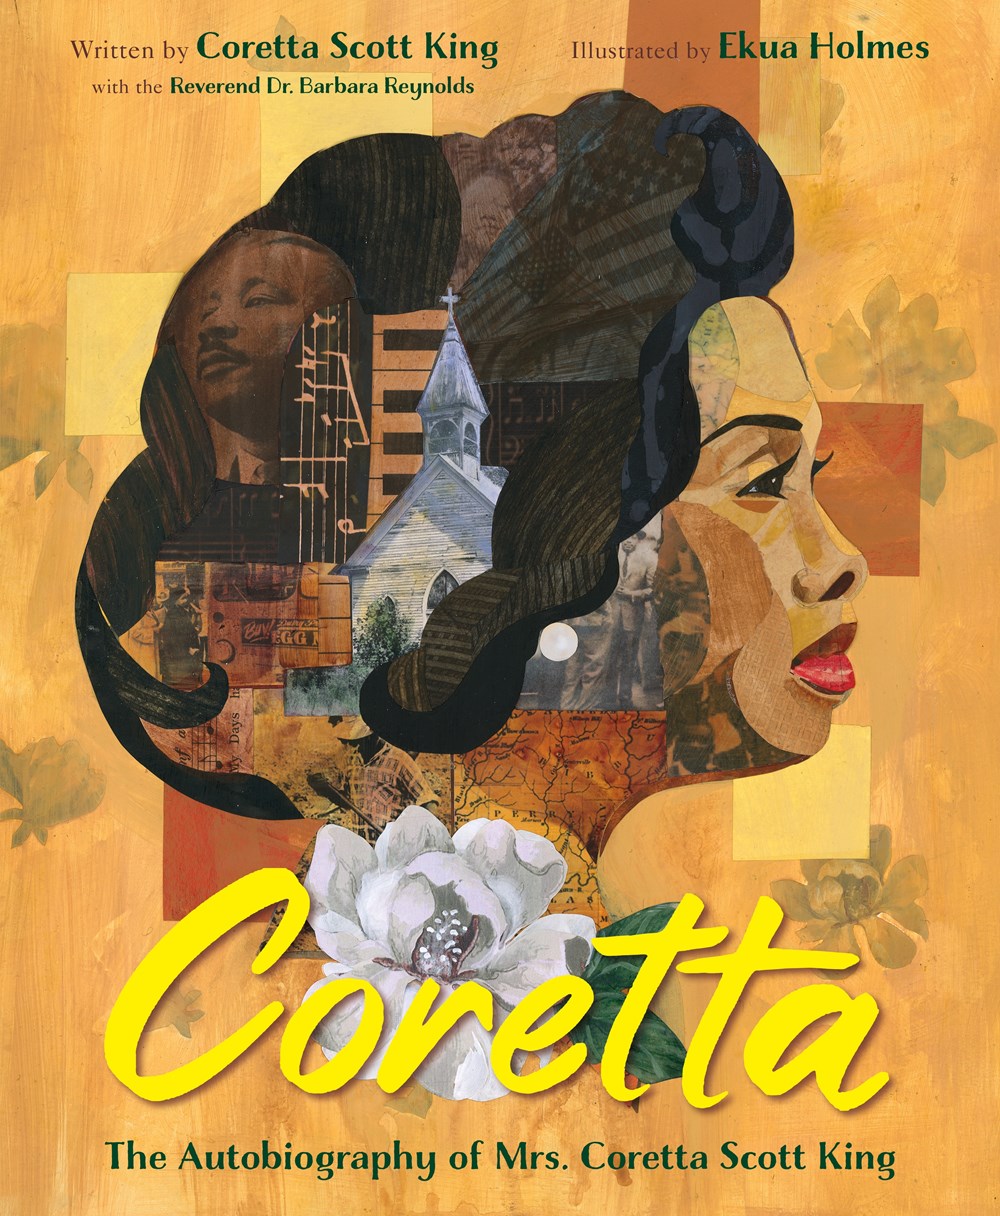 Cover of Coretta: The Autobiography of Mrs. Coretta Scott King by Coretta Scott King, illustrated by Ekua Holmes